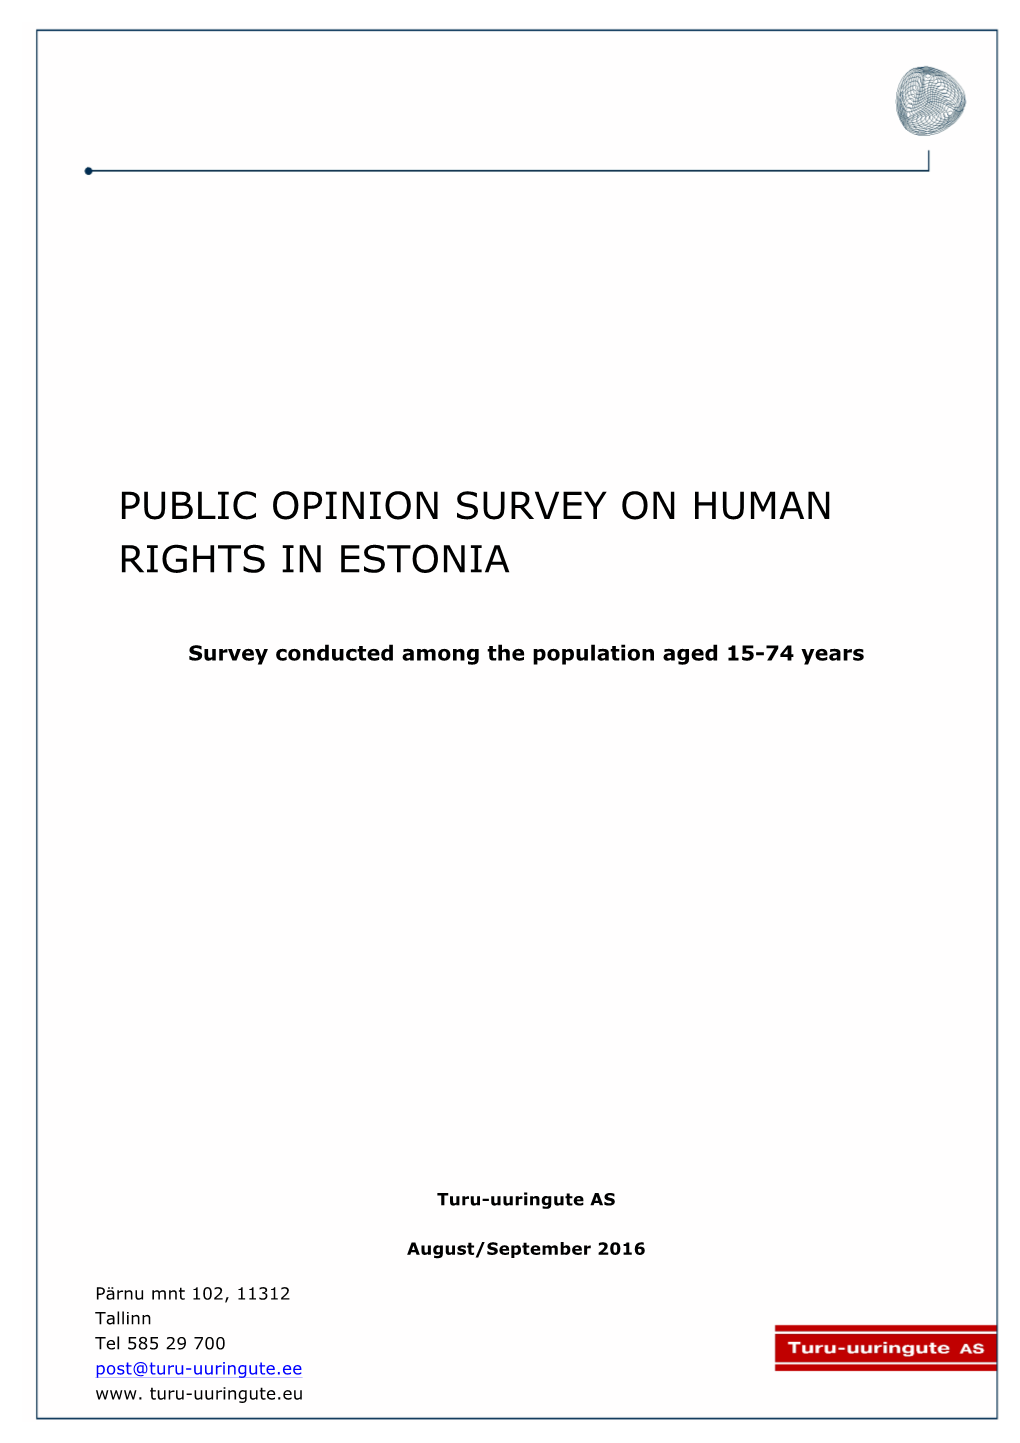 Public Opinion Survey on Human Rights in Estonia